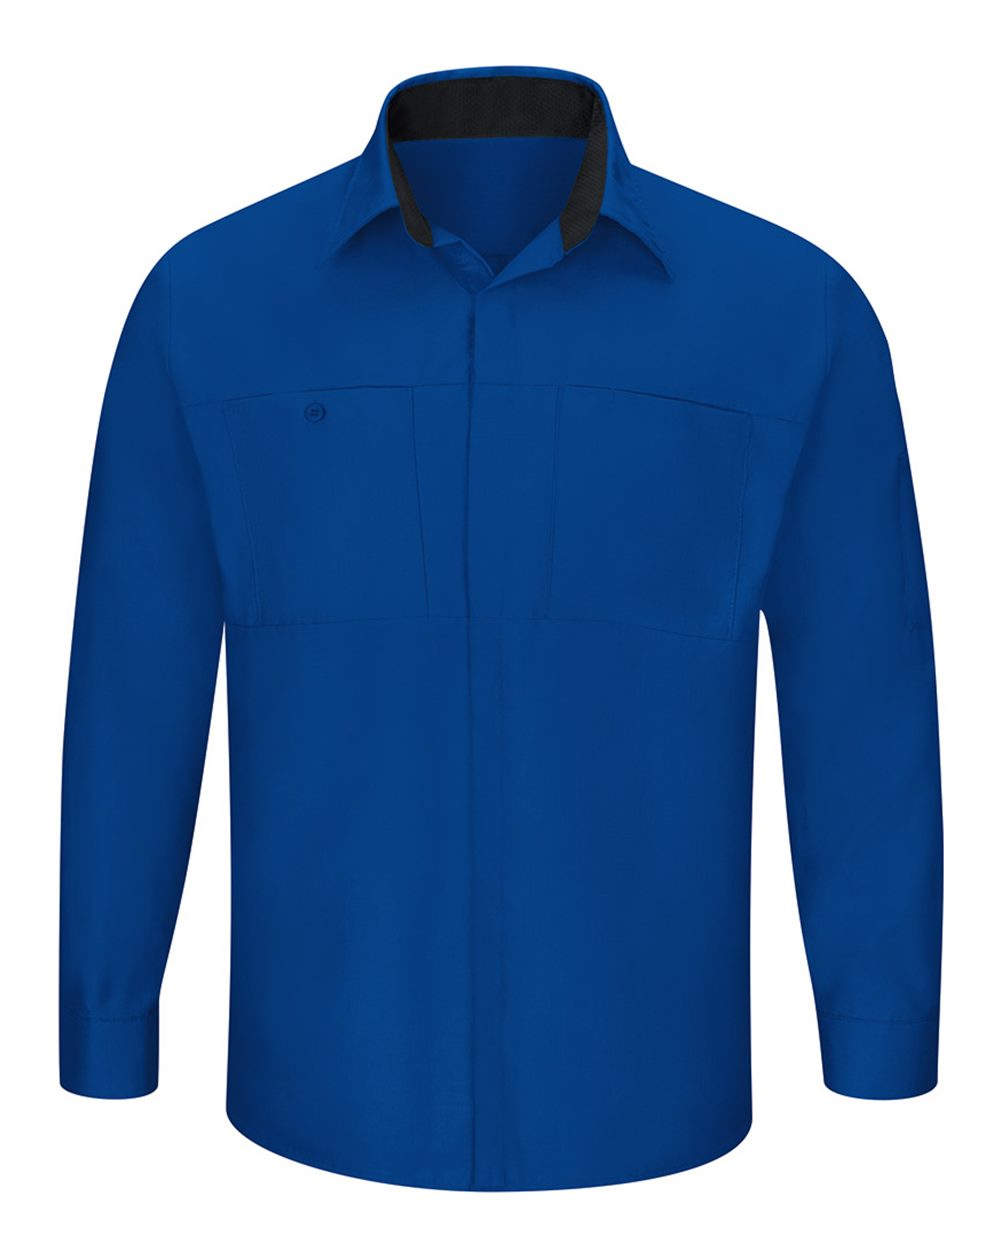 56730 Men\'s Performance Plus Long Sleeve Shop Shirt with Oilblok Technology - SY32